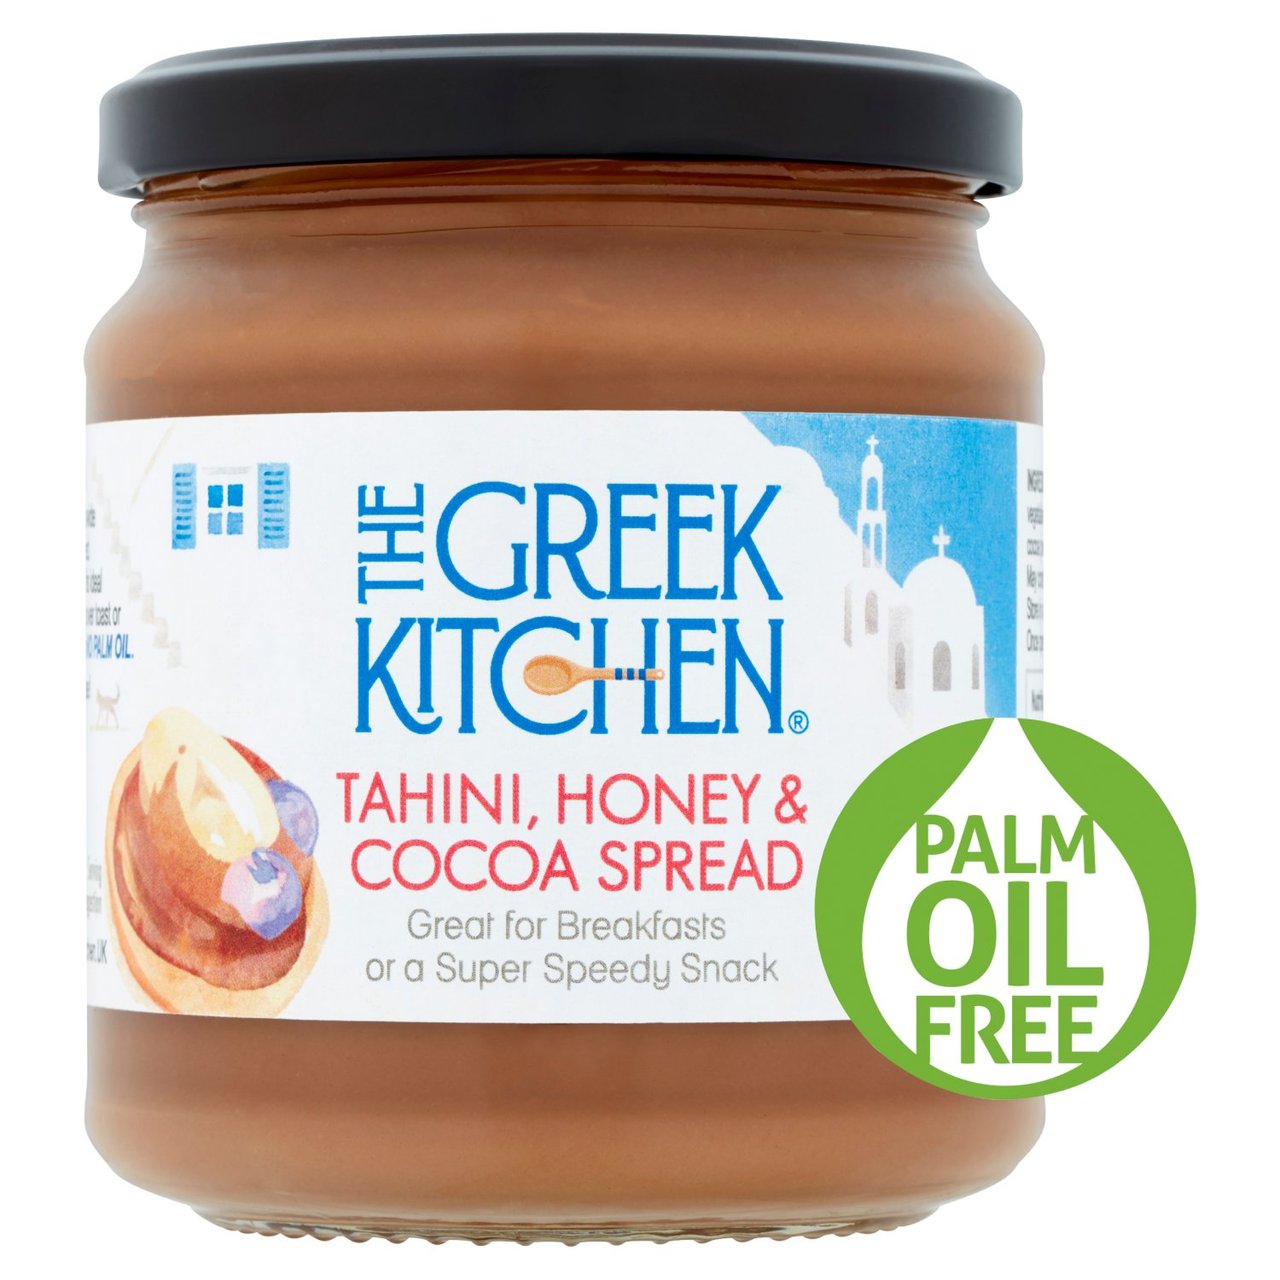 The Greek Kitchen Tahini, Honey & Cocoa Spread